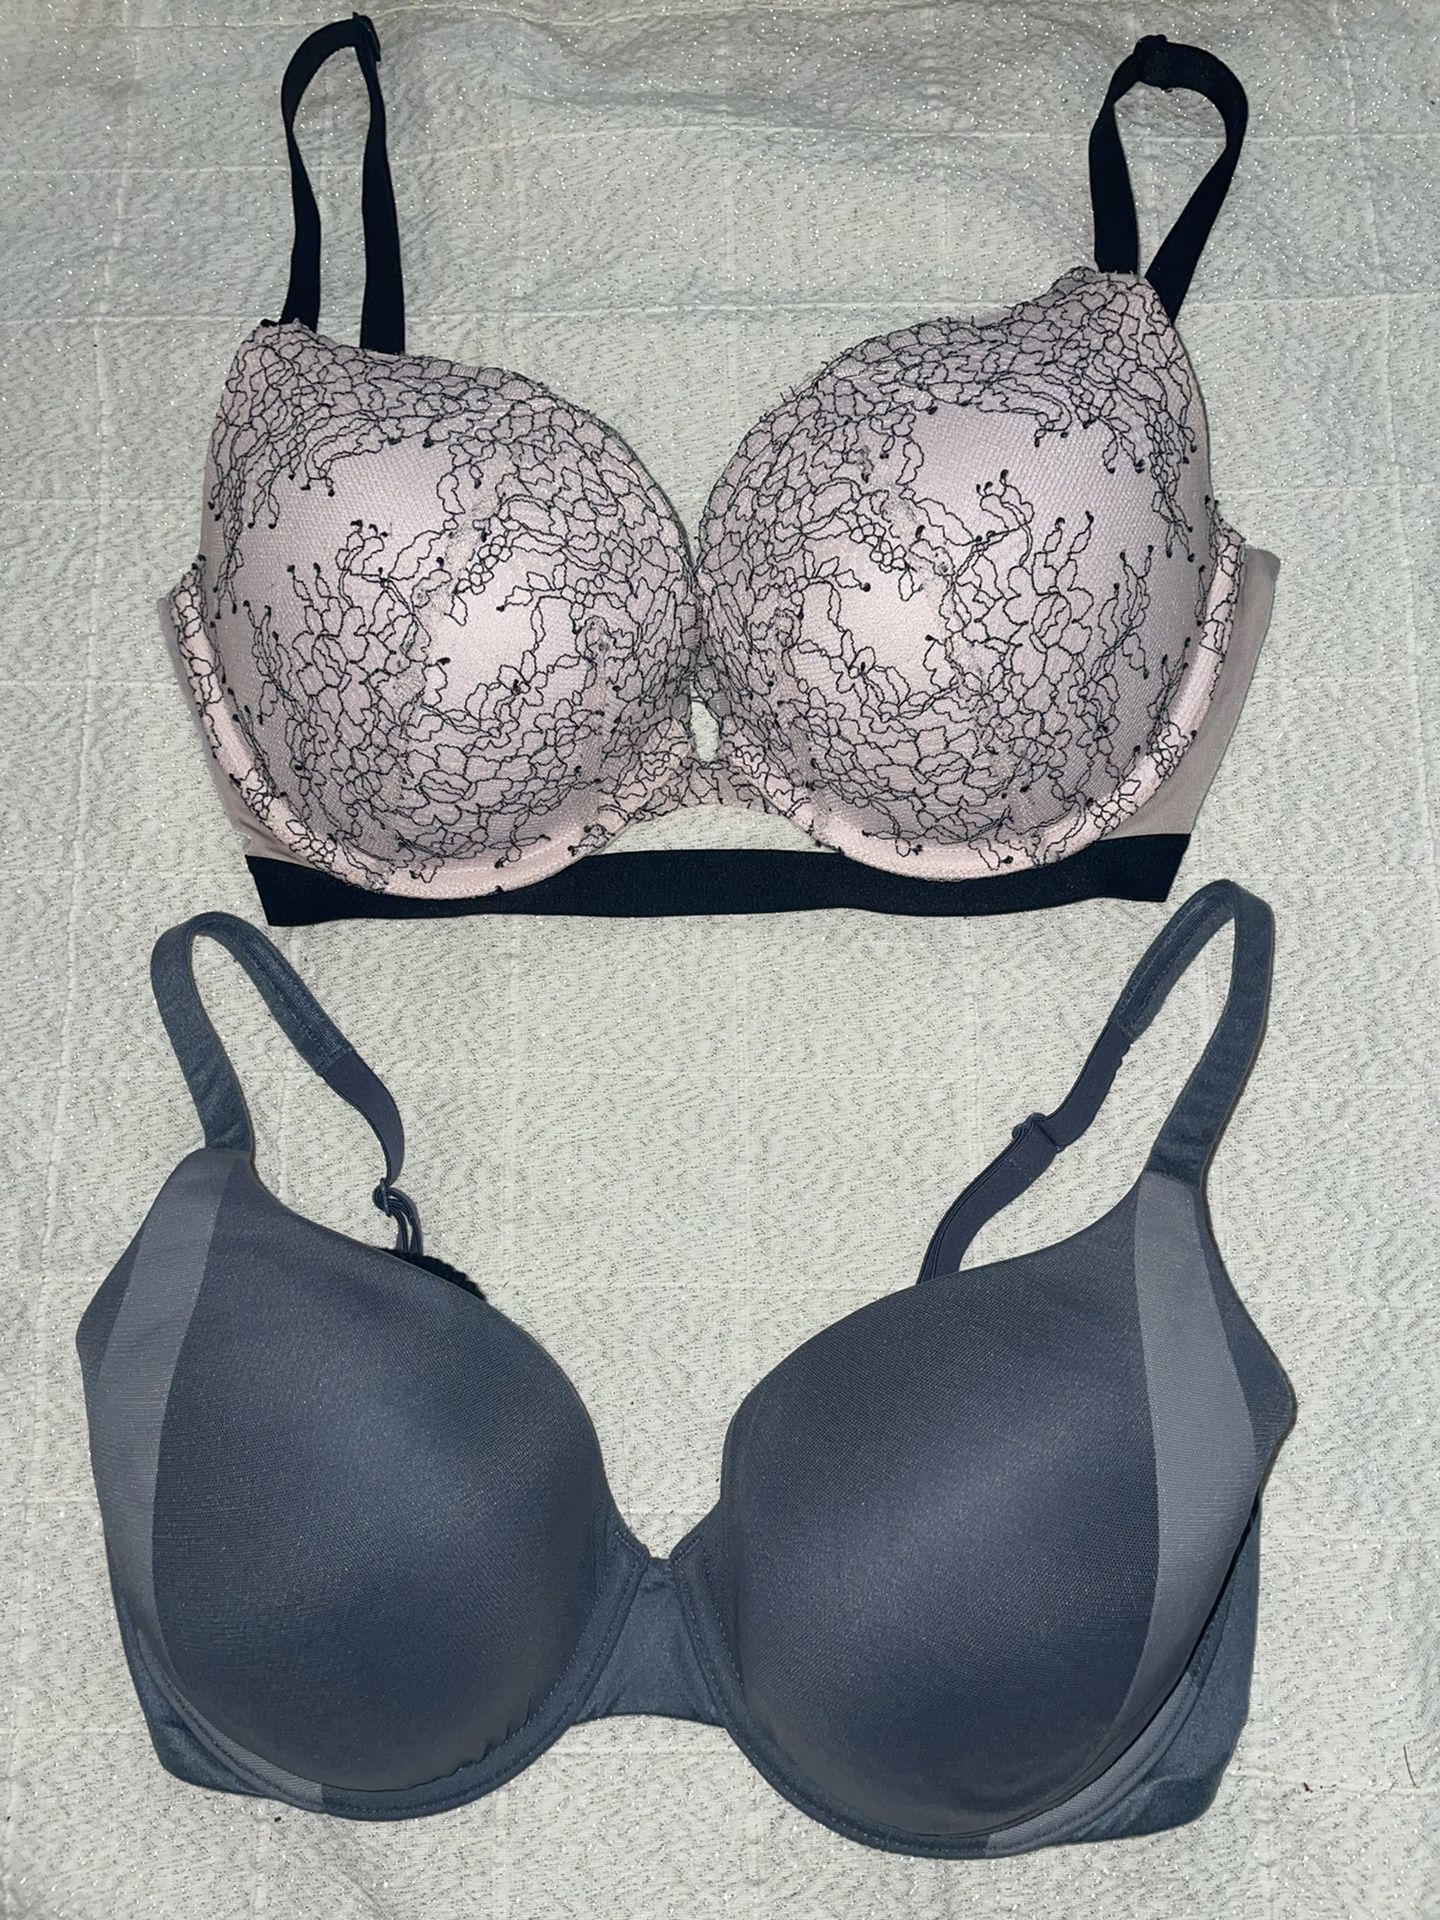 Victoria's Secret bra 34D for Sale in Garden City P, NY - OfferUp